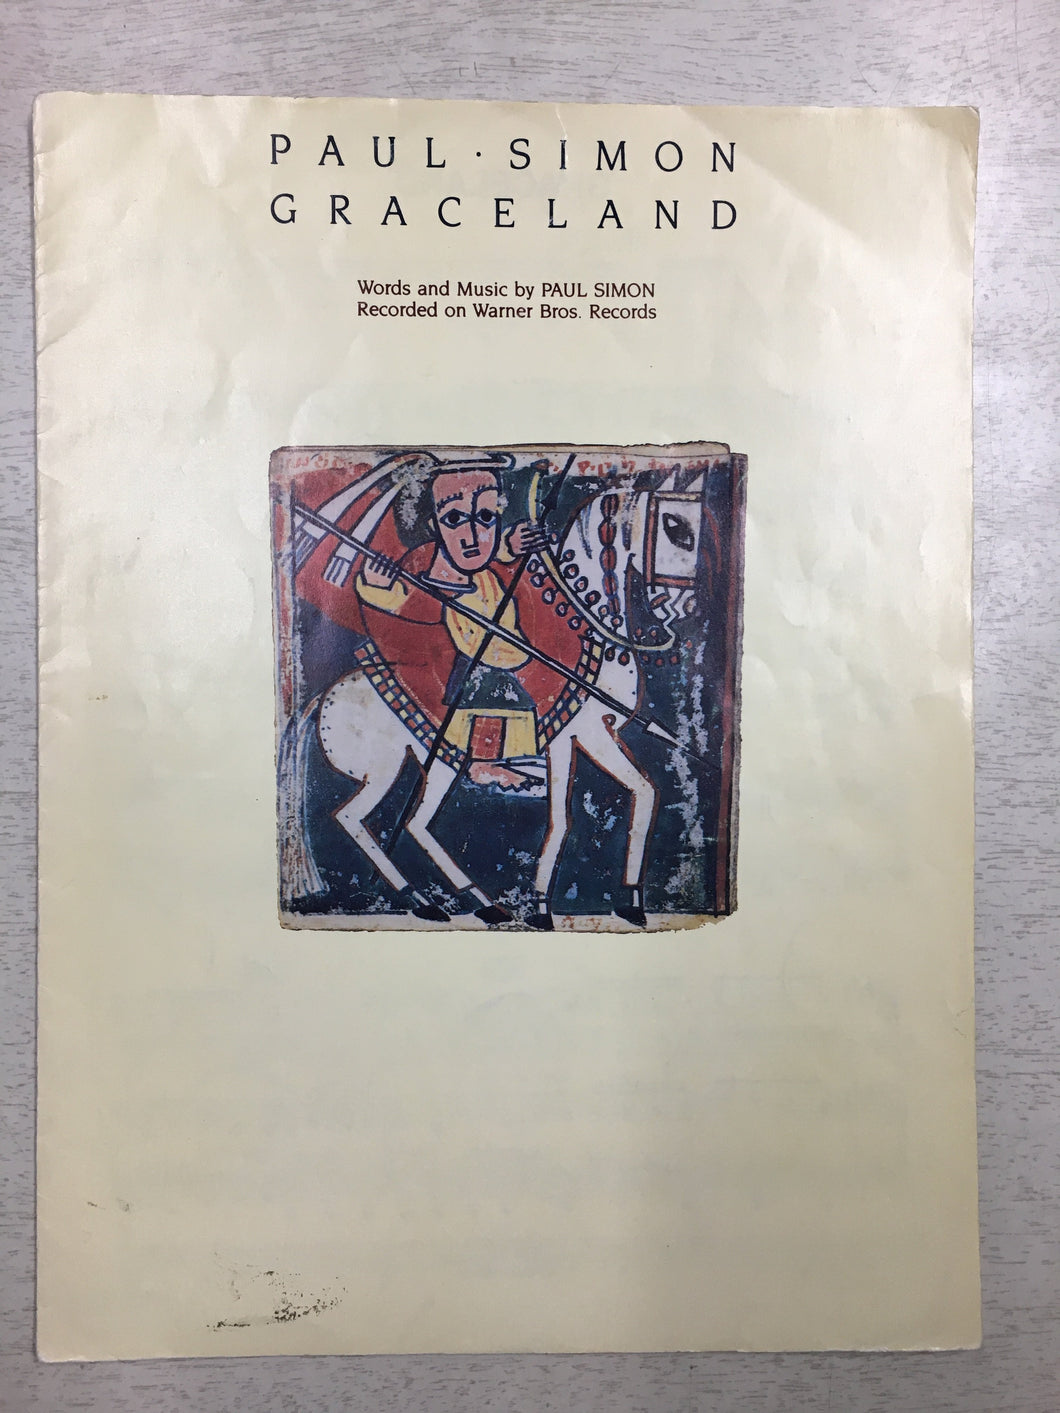 Graceland, Paul Simon